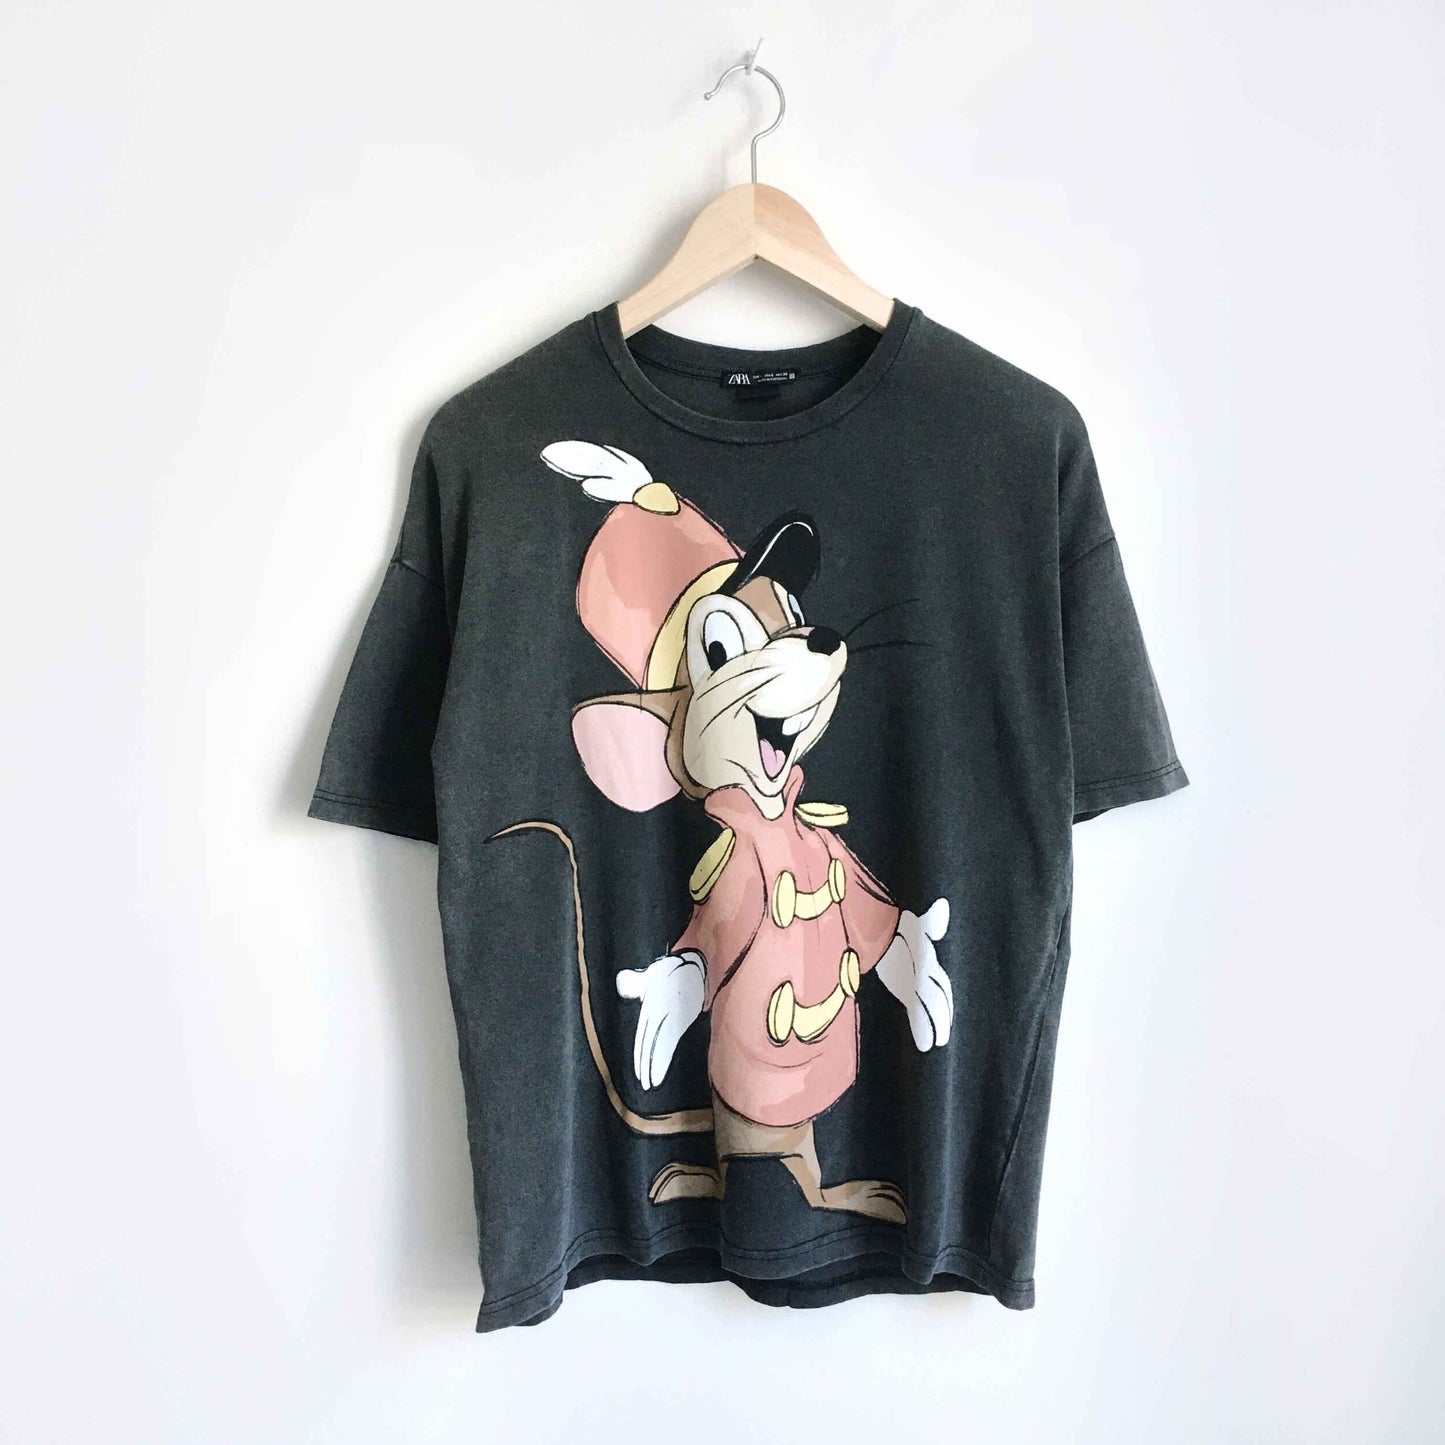 Zara Disney Dumbo Timothy Q. mouse t-shirt - size Small